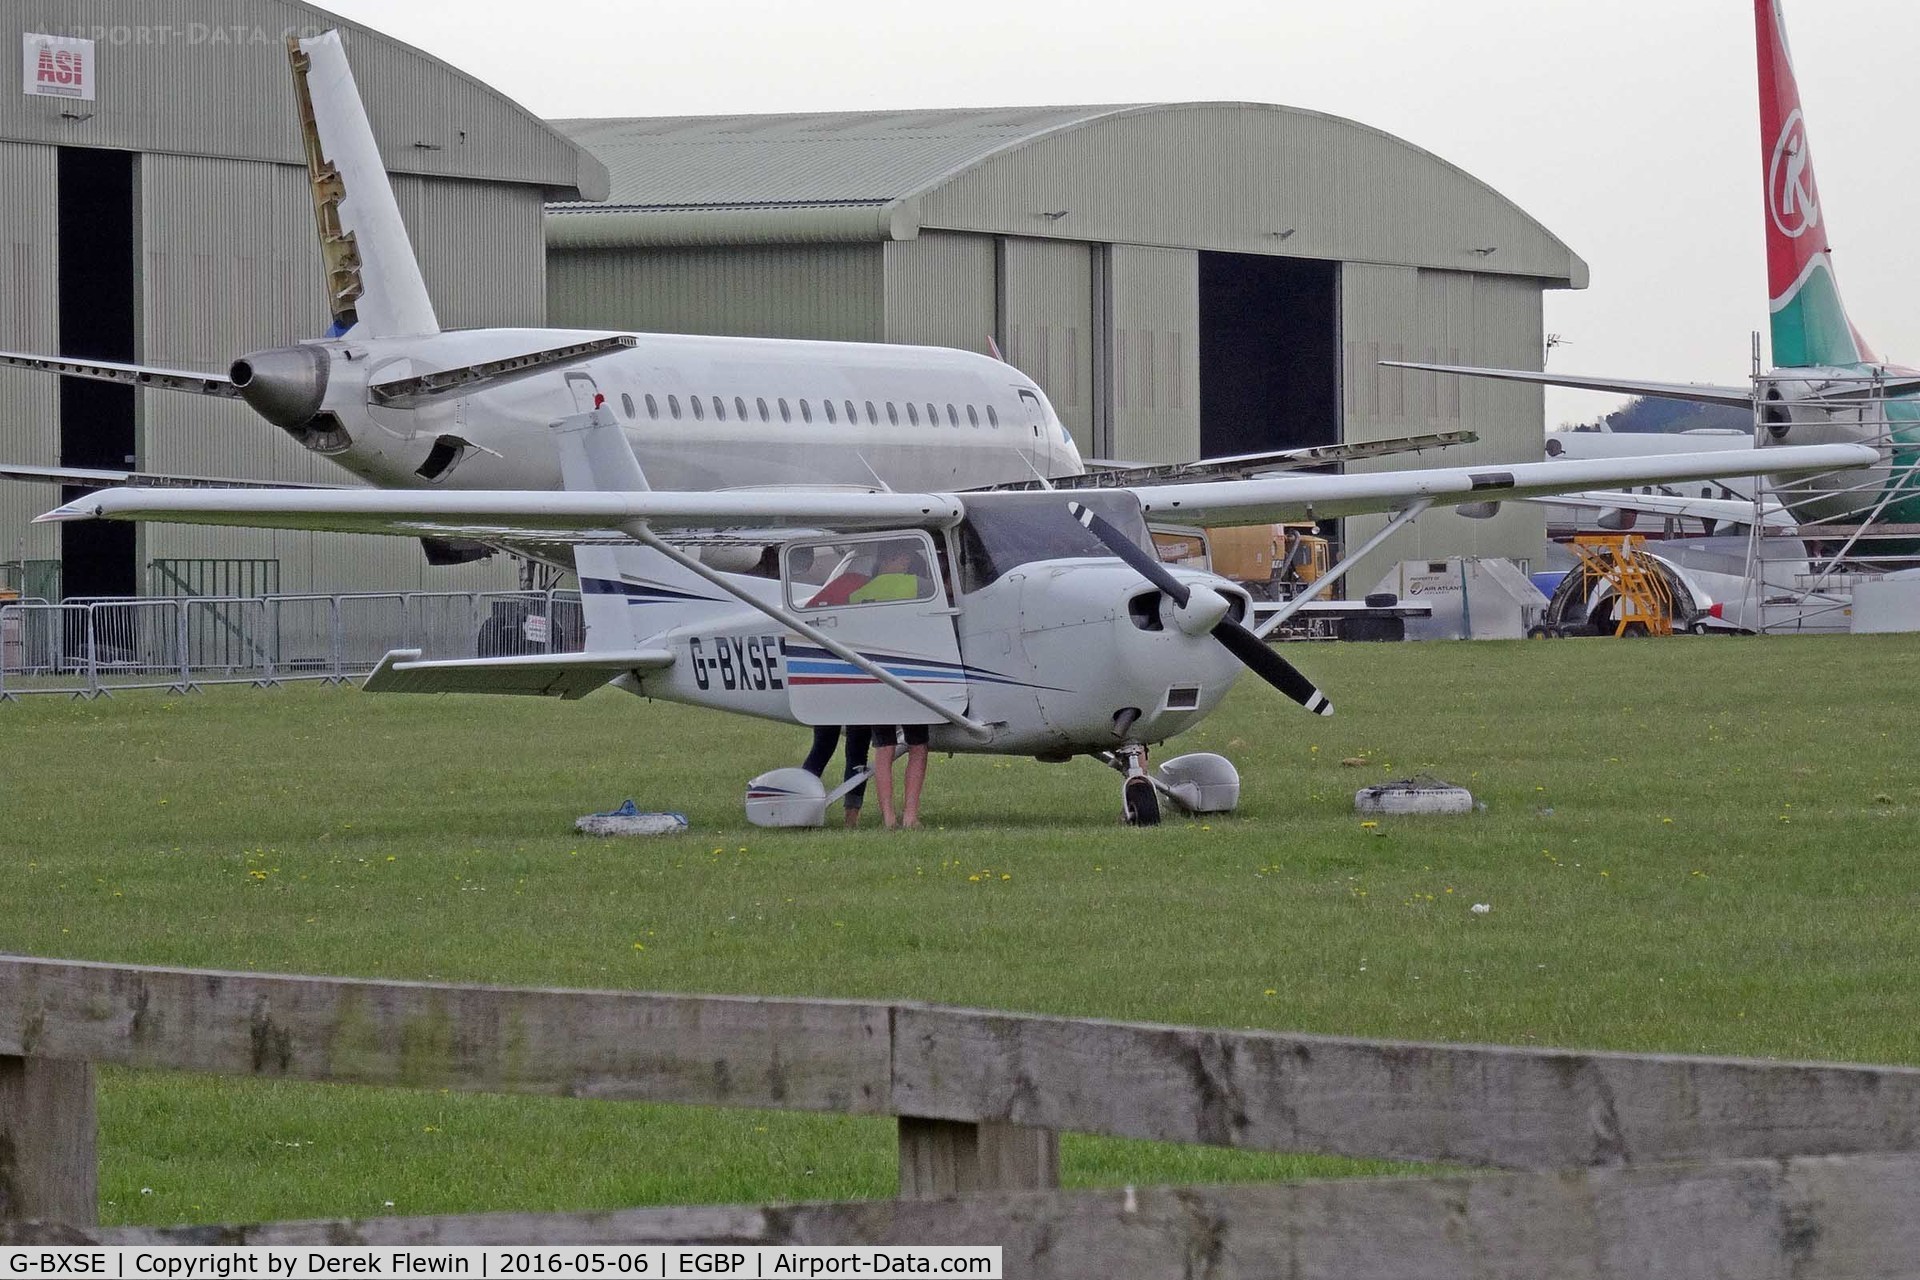 G-BXSE, 1998 Cessna 172R Skyhawk C/N 17280352, Skyhawk, Andrewsfield based, previously N9321F, seen parked up.